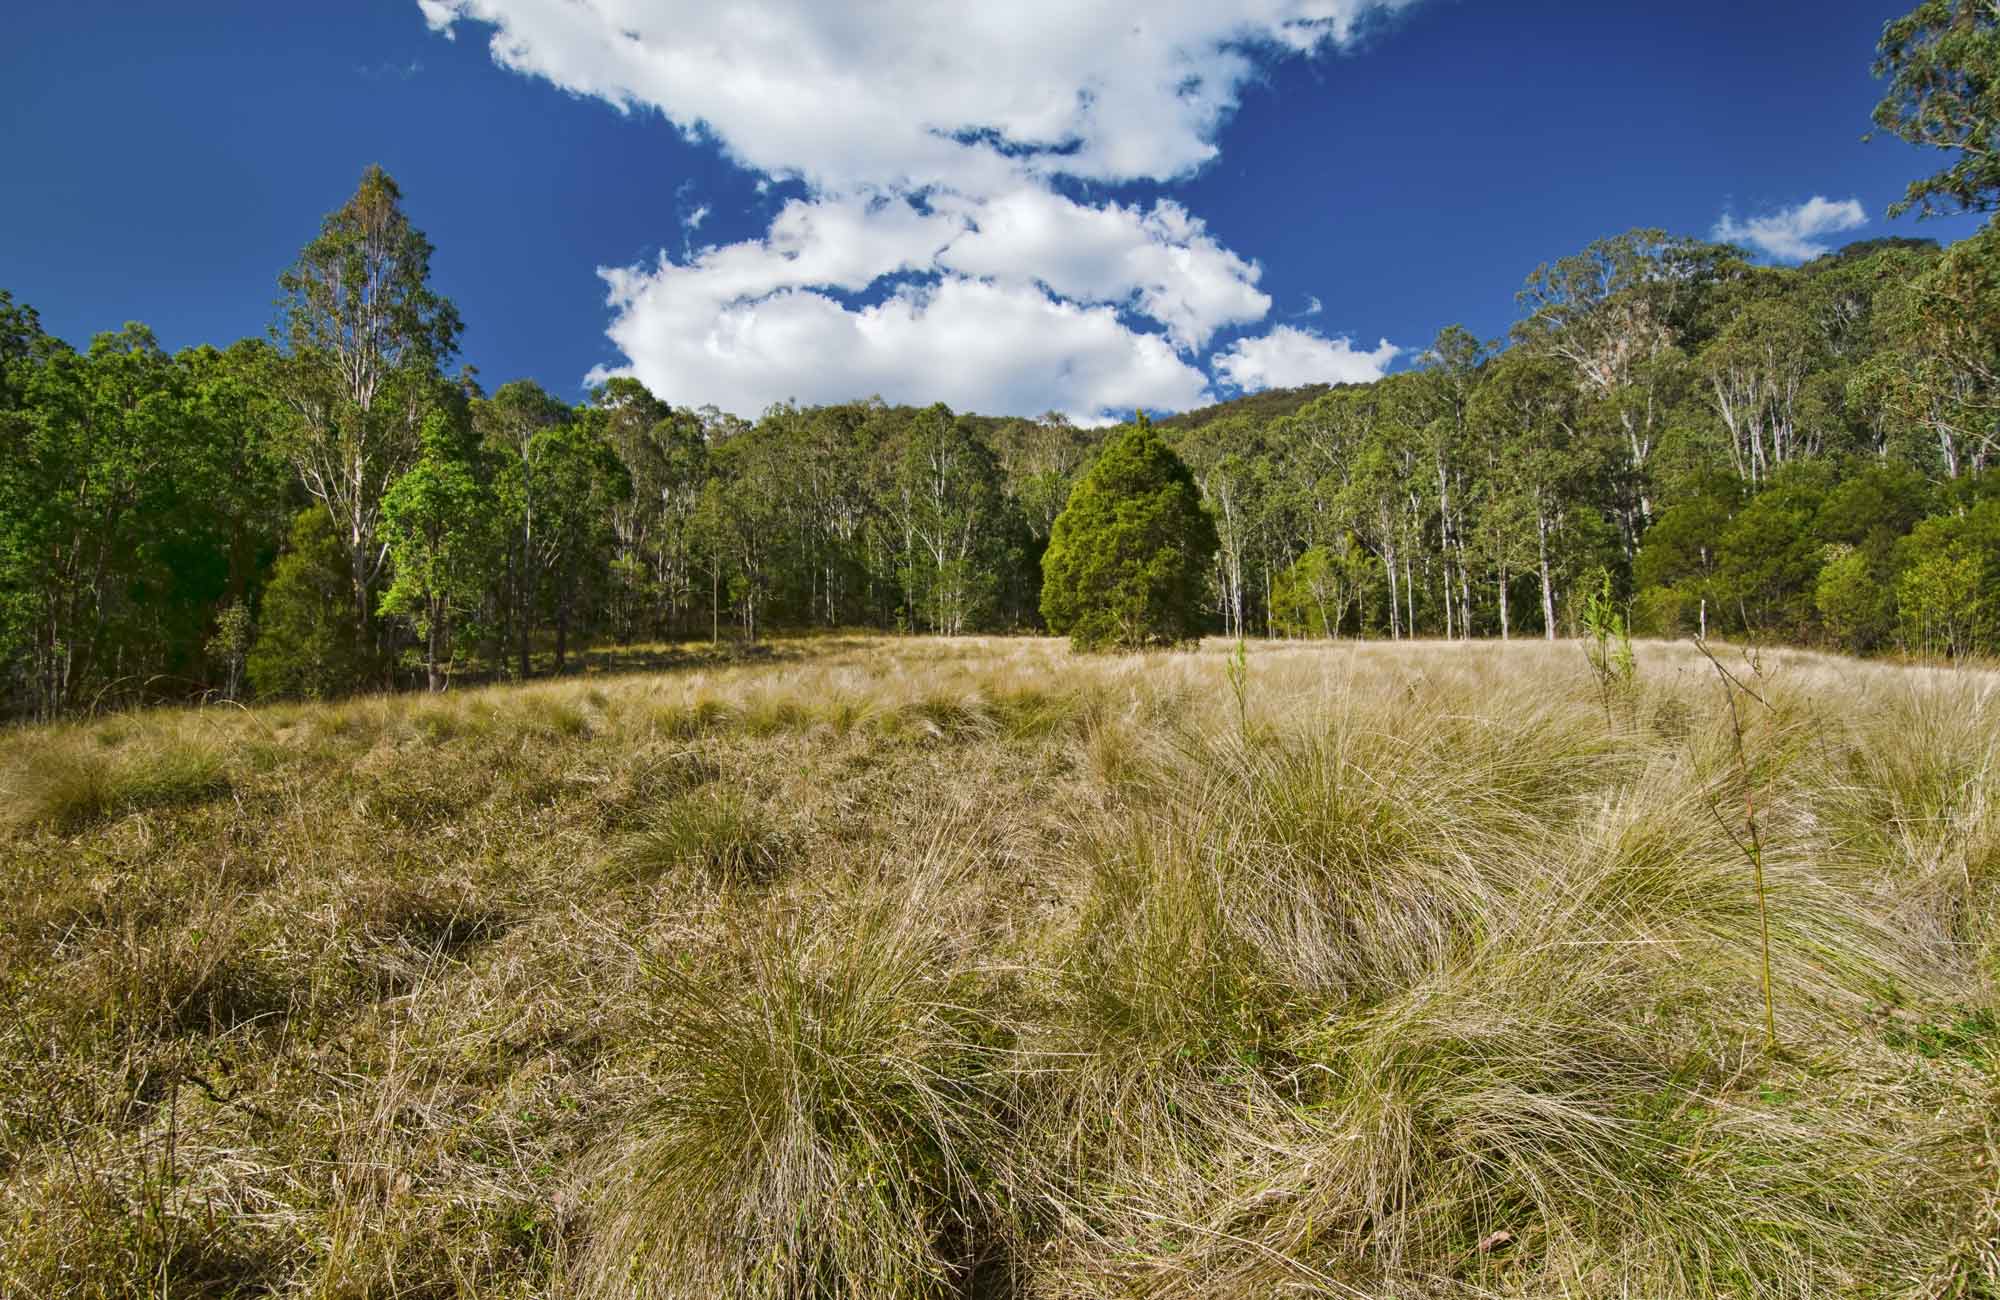 Brush Turkey track, Woko National Park. Photo: John Spencer/NSW Government